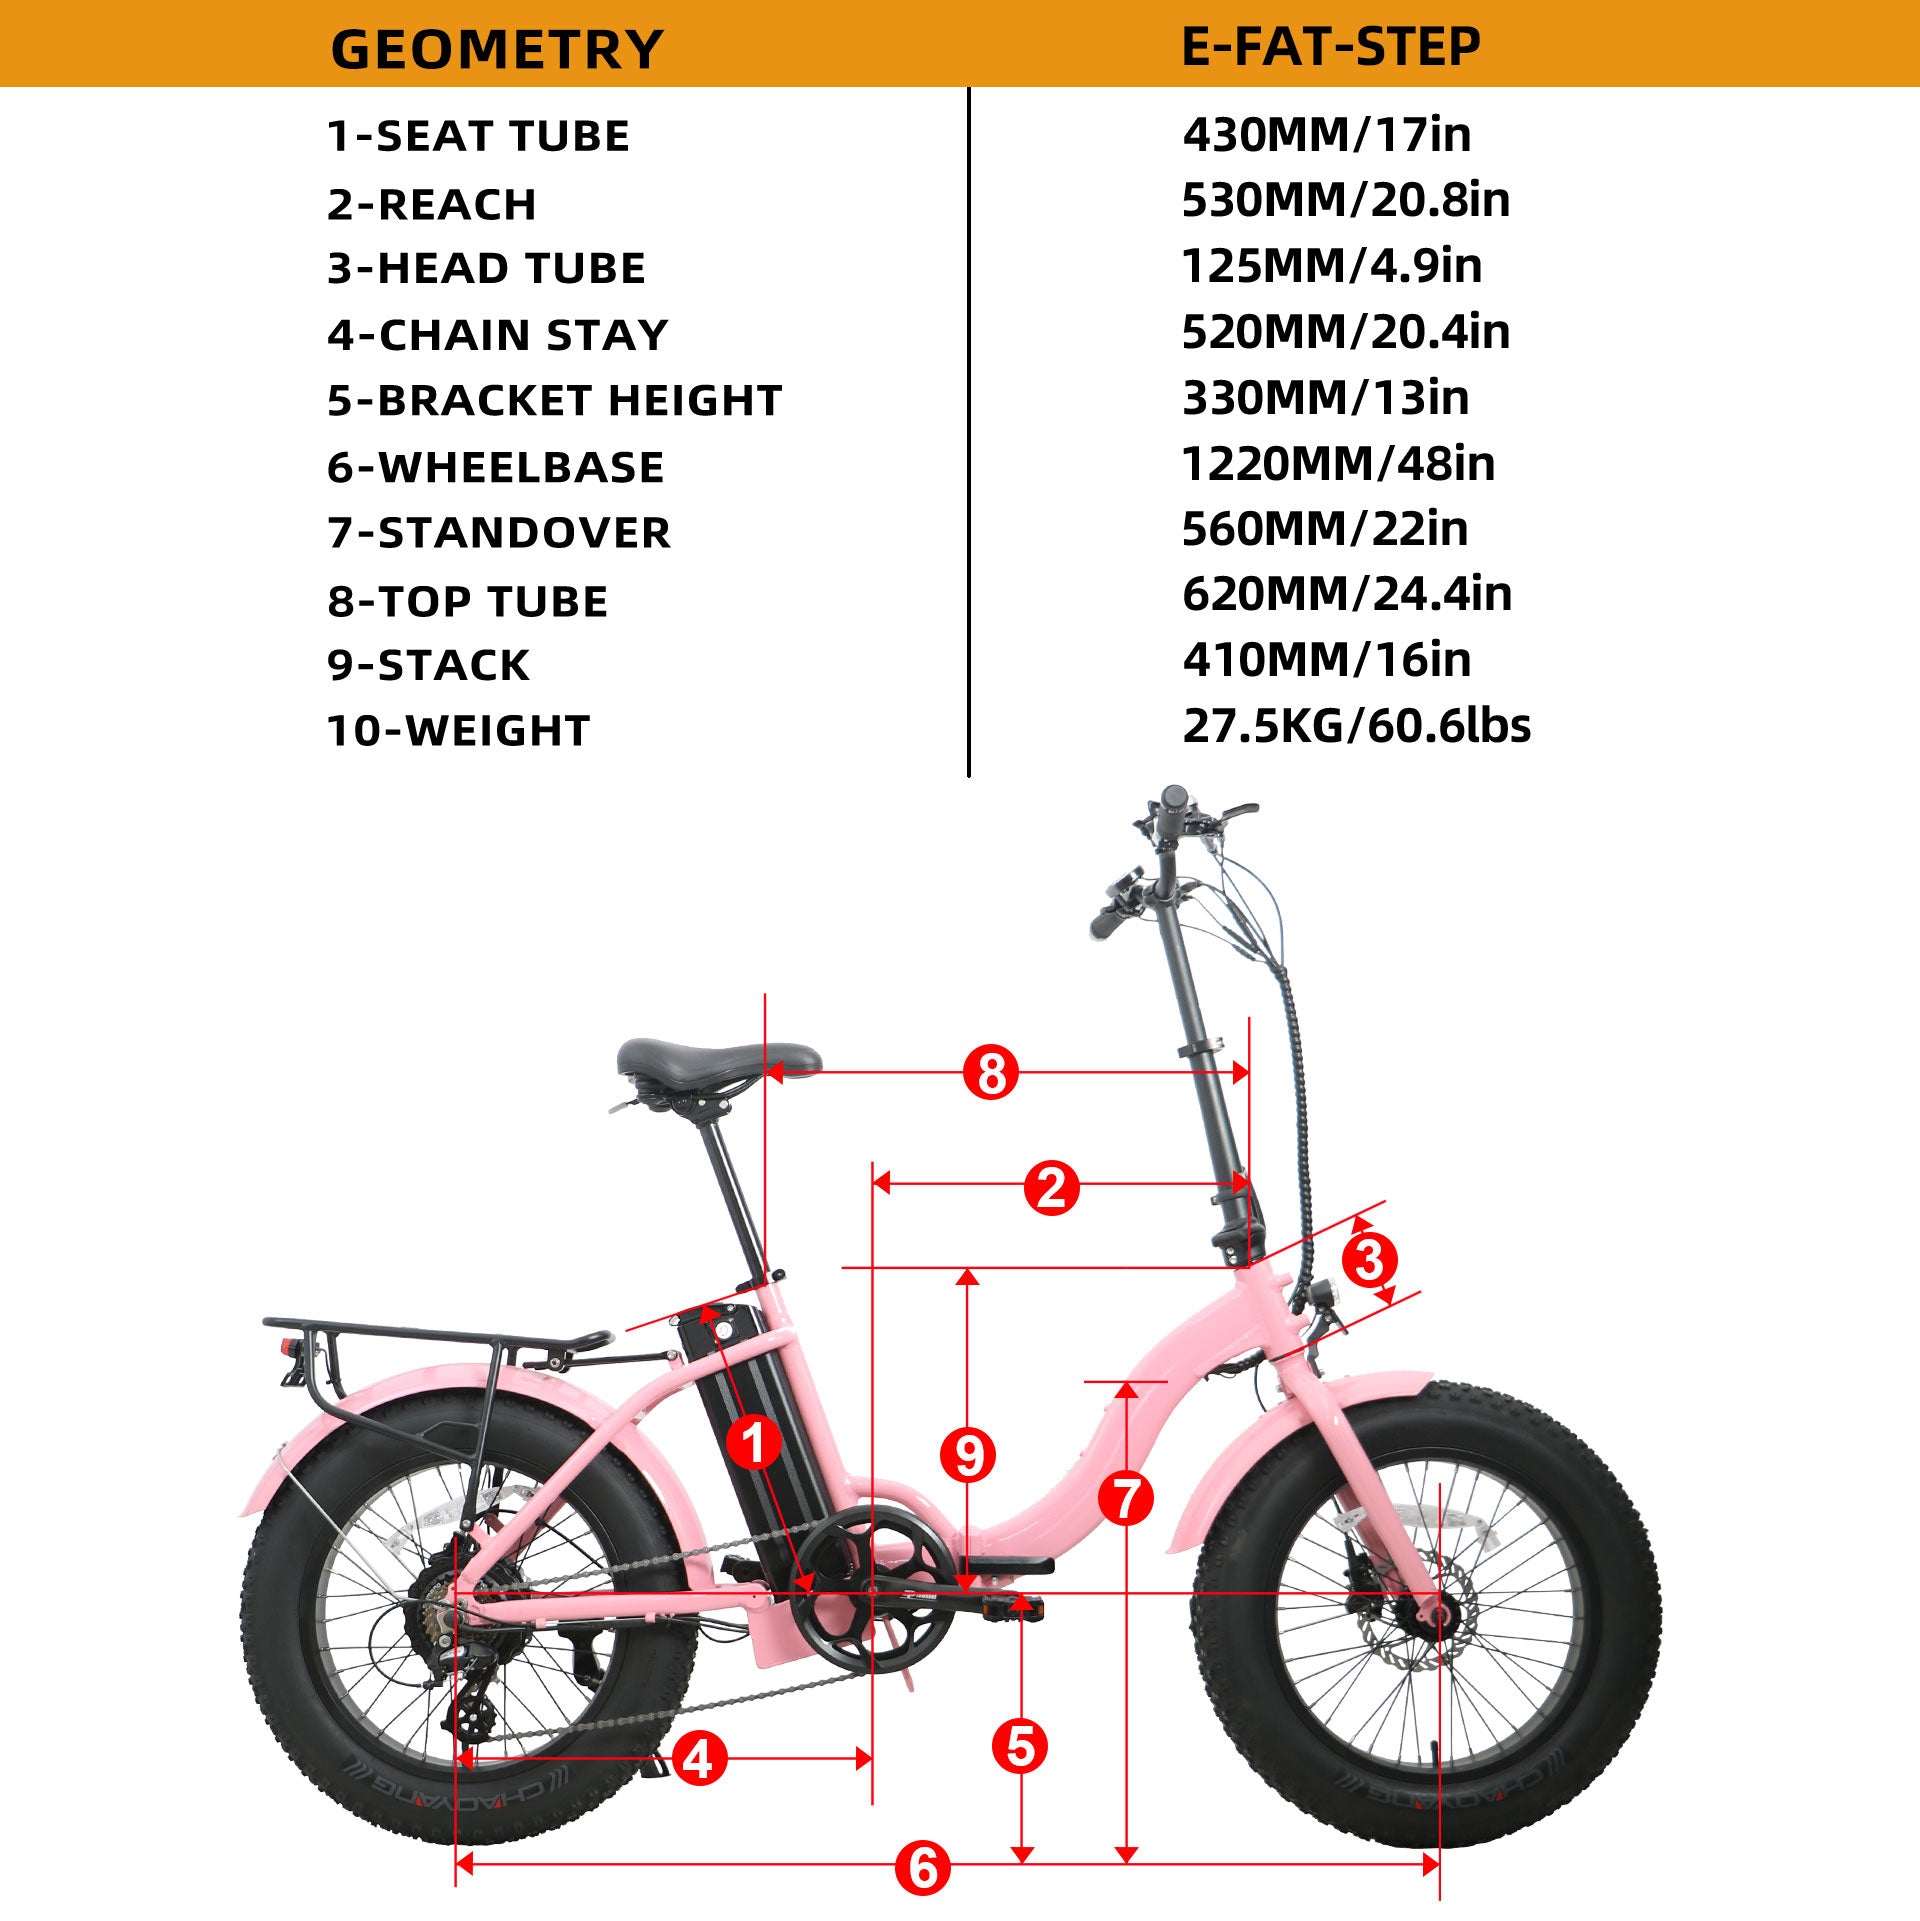 Moped style E-bike Eunorau E-Fat-Step 

Geometry